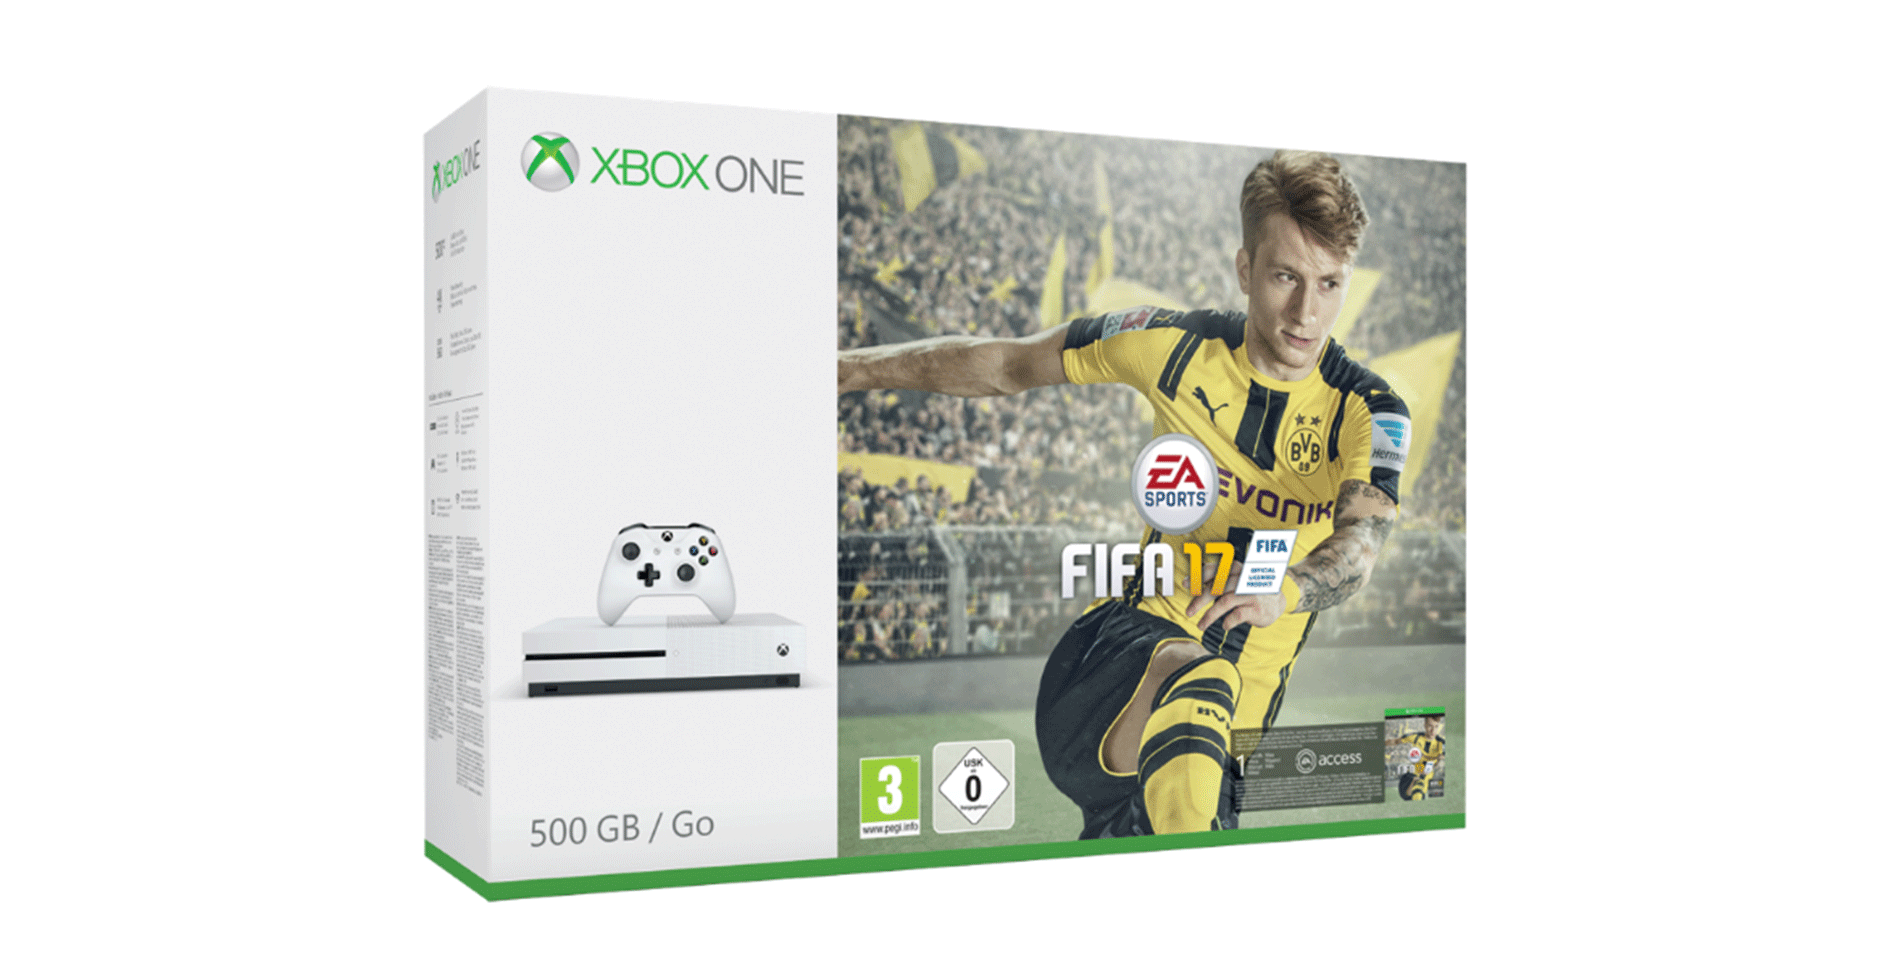 FIFA Xbox One S bundle